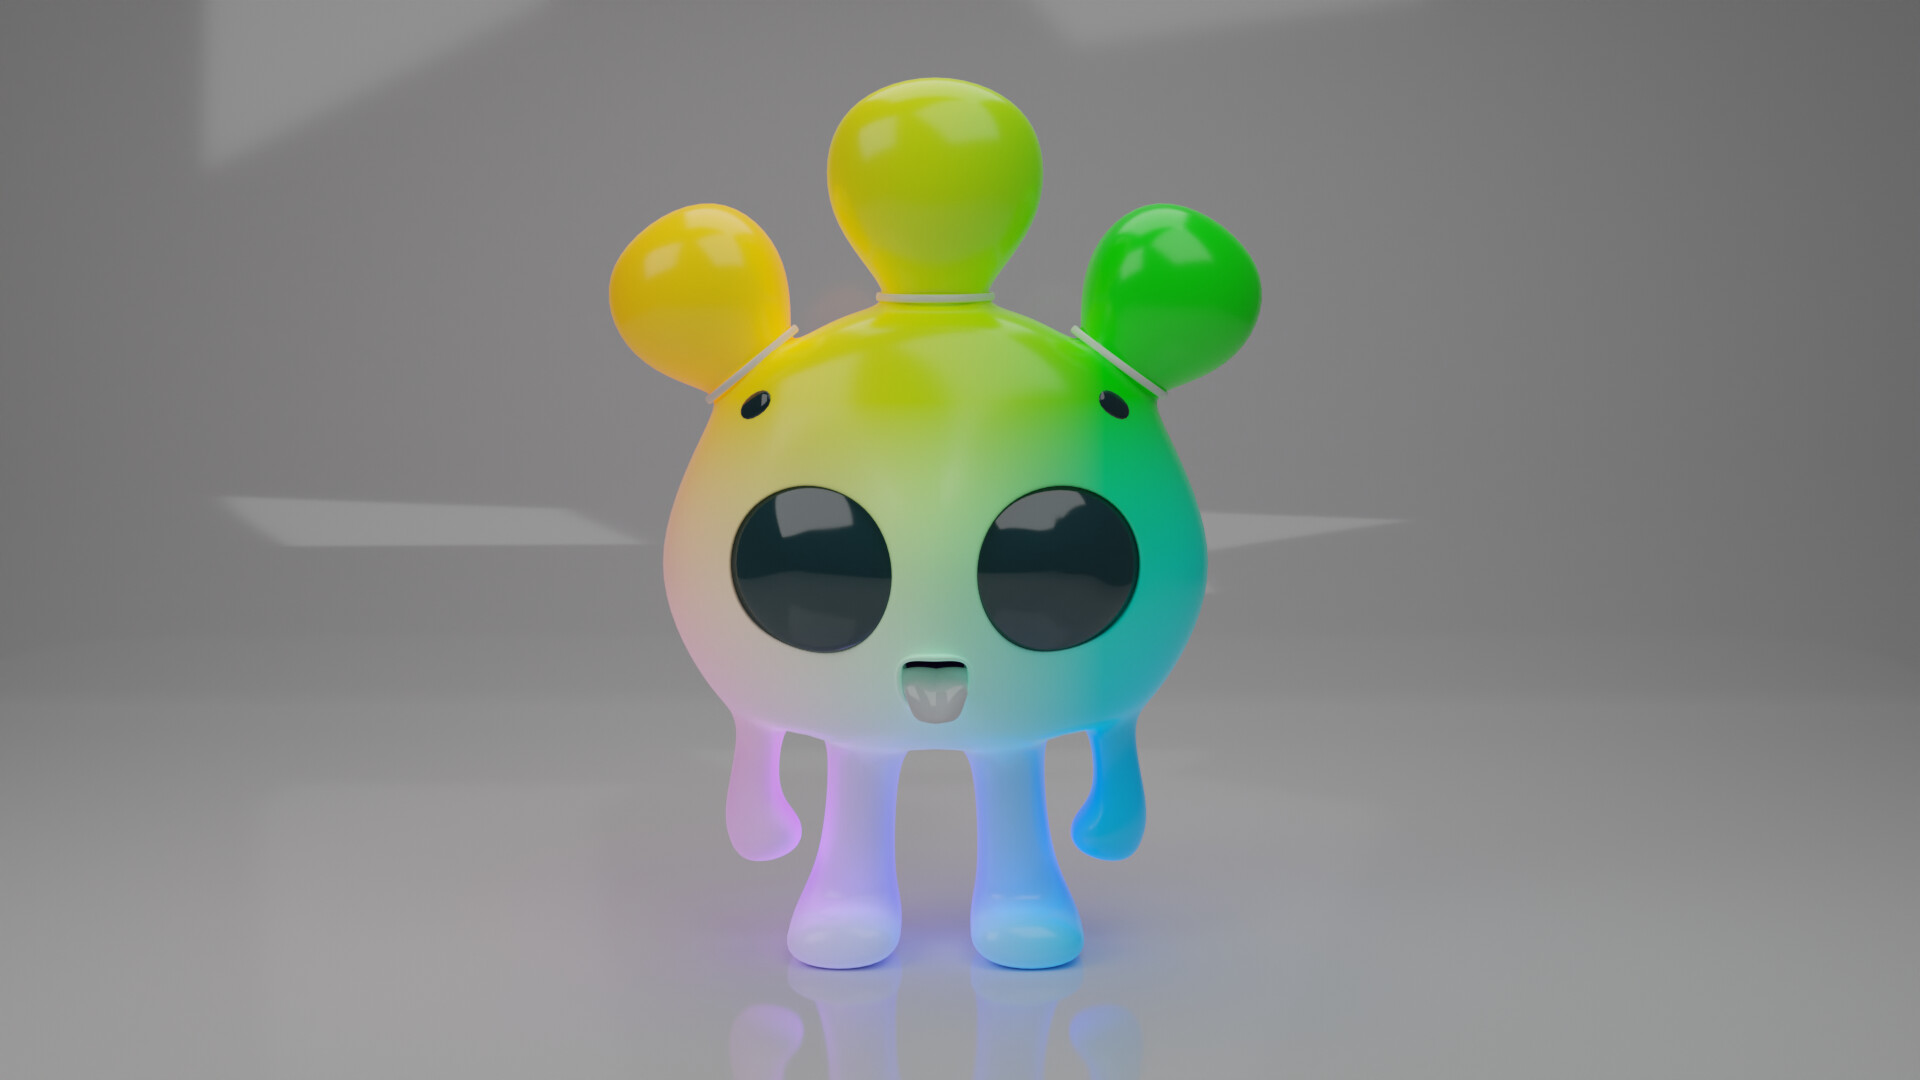 ArtStation - 3D character